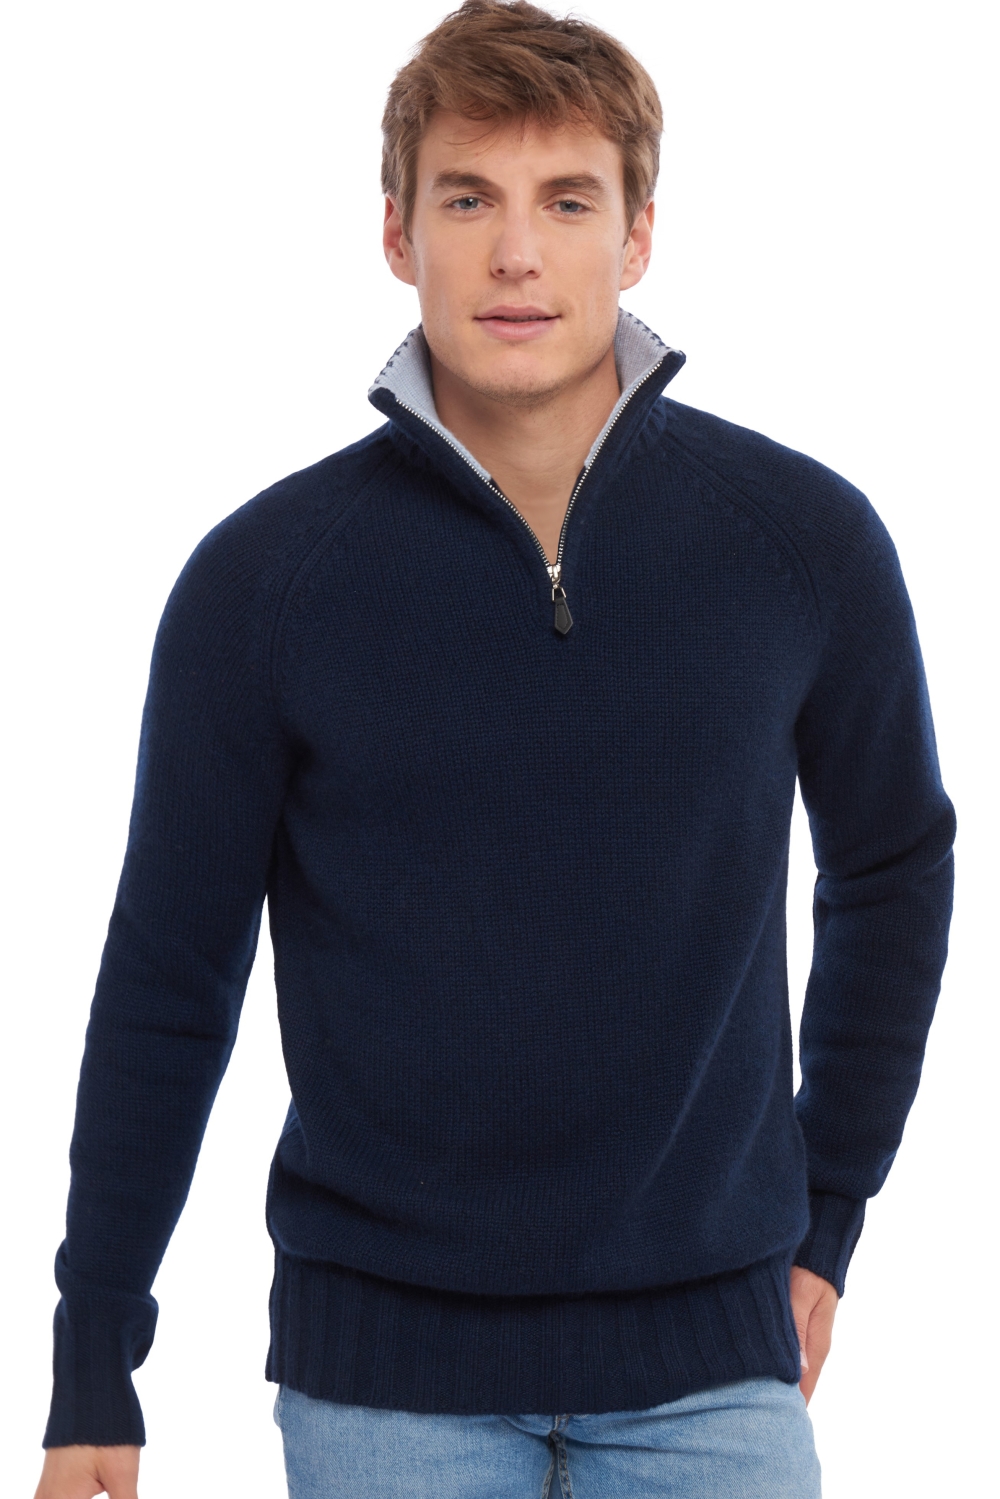 Cashmere men chunky sweater olivier dress blue bayou s